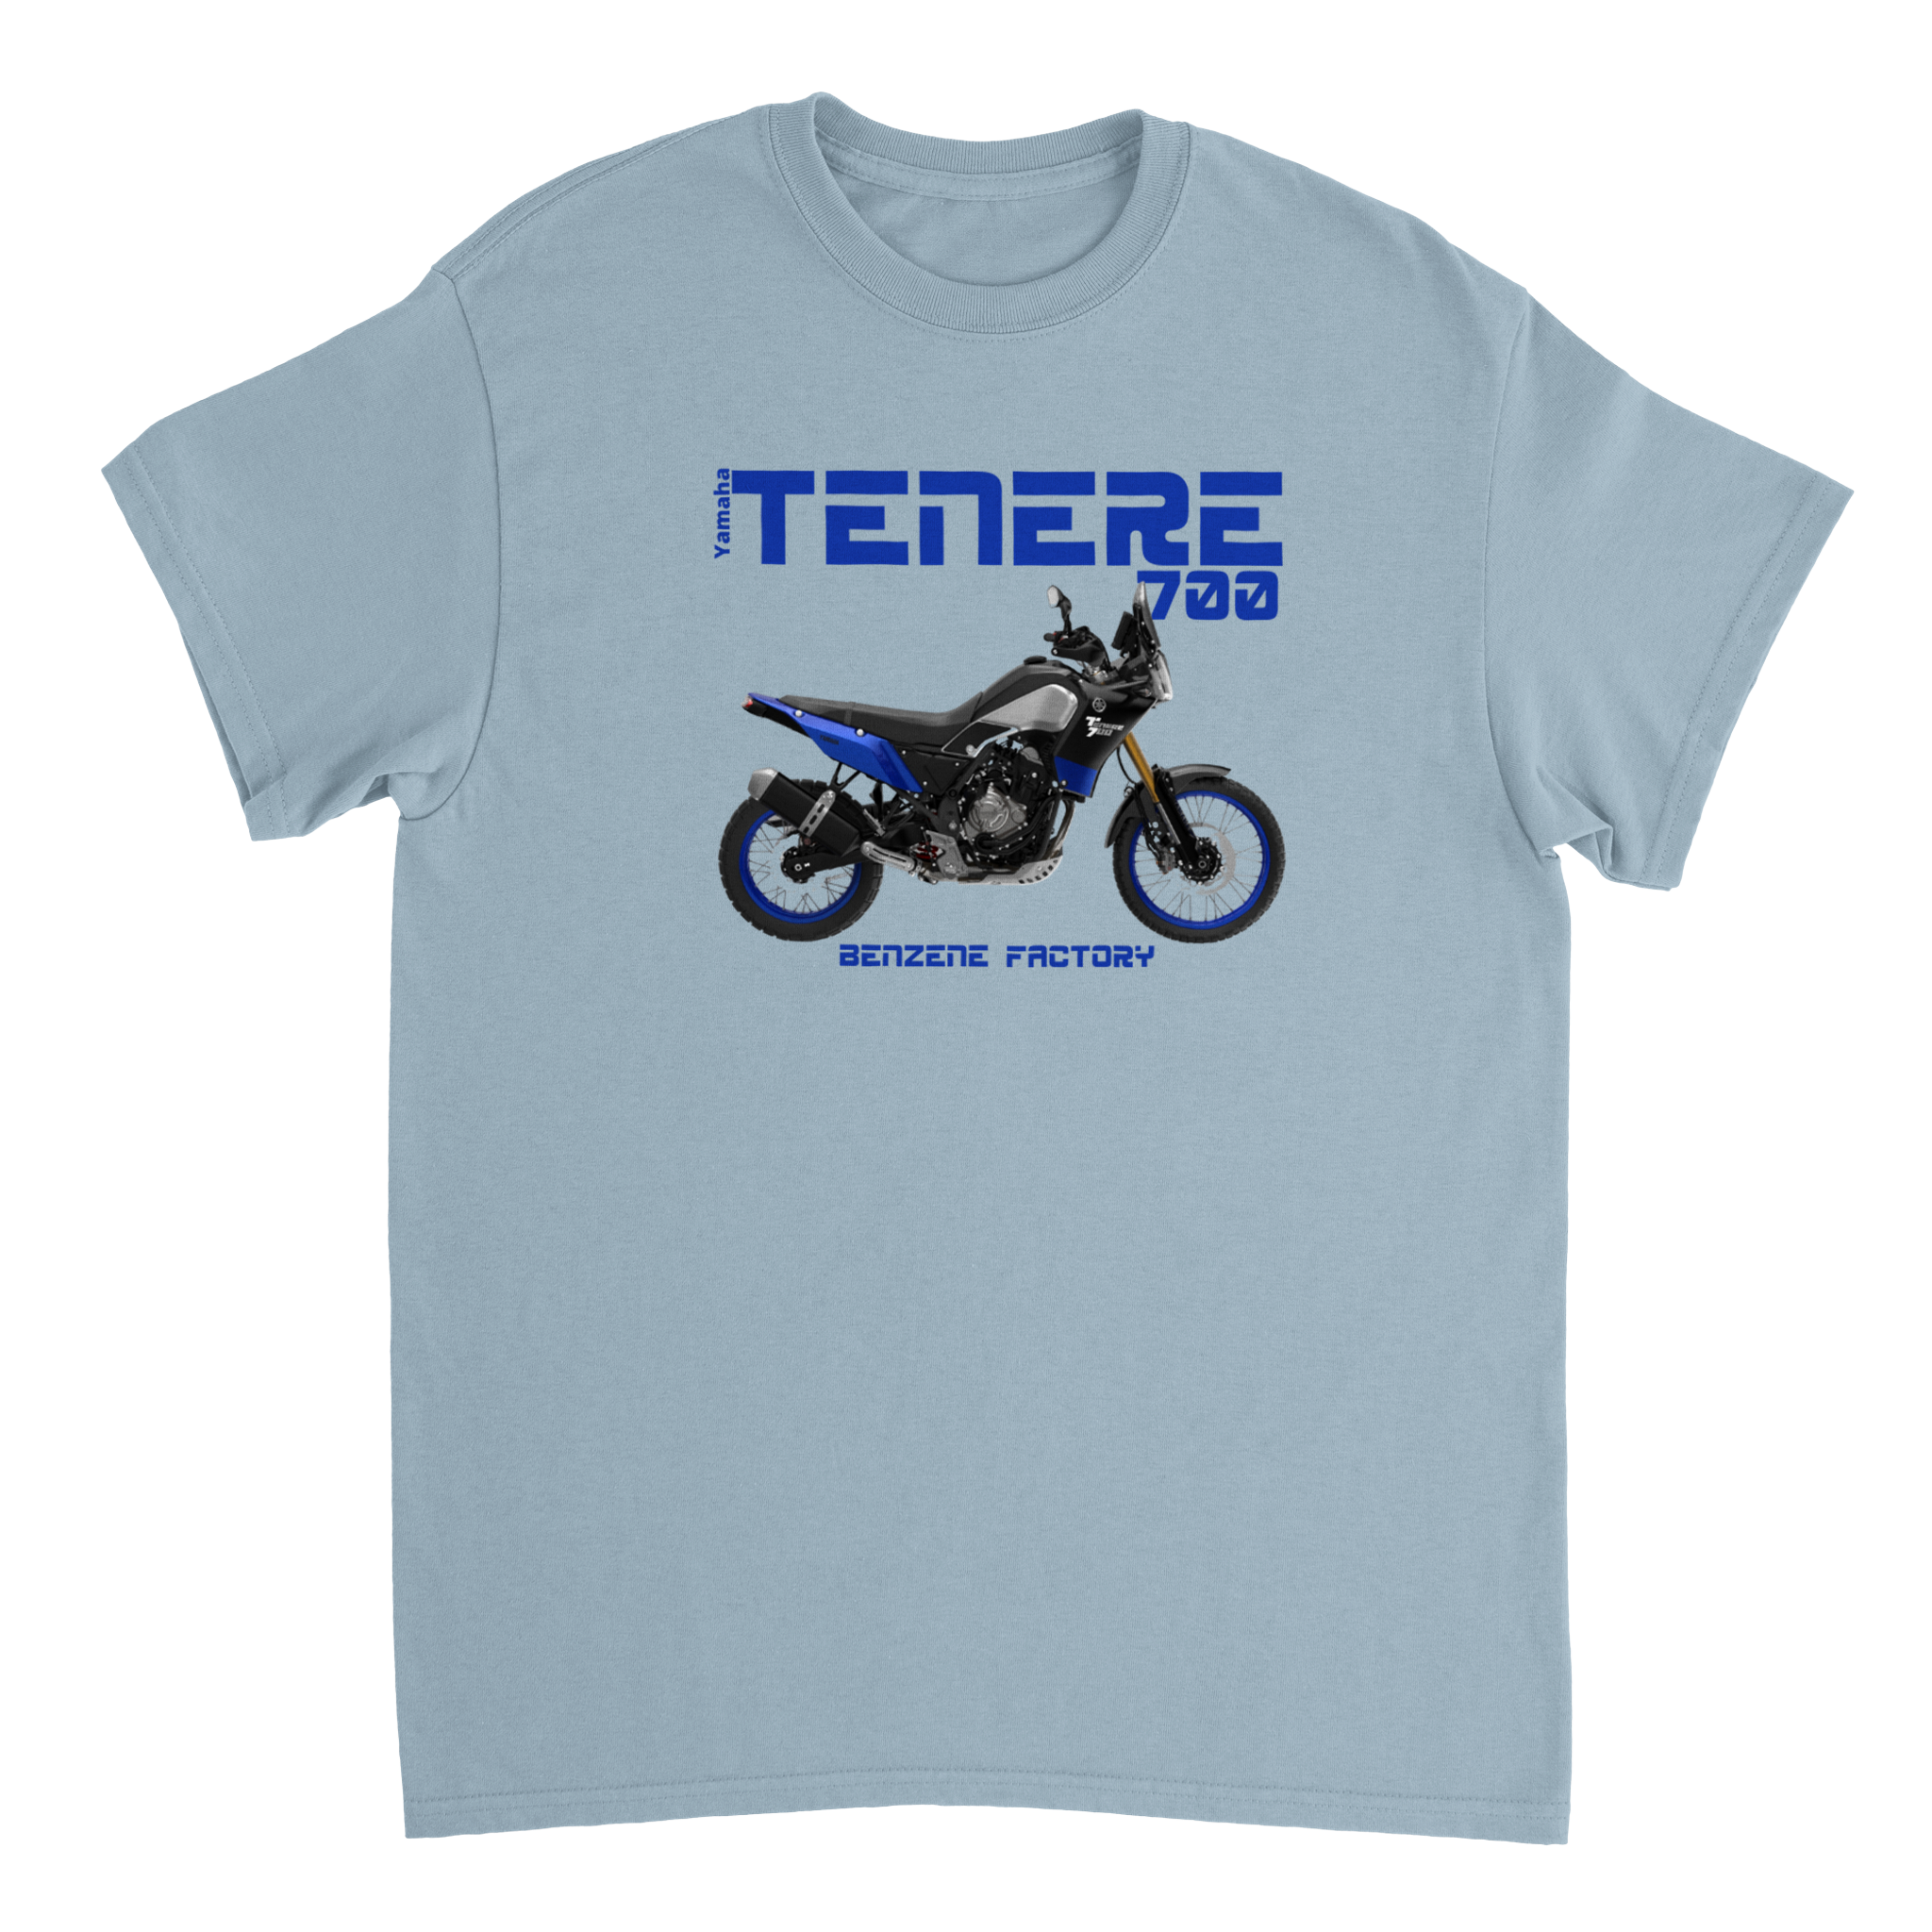 T-shirt Tenere 700